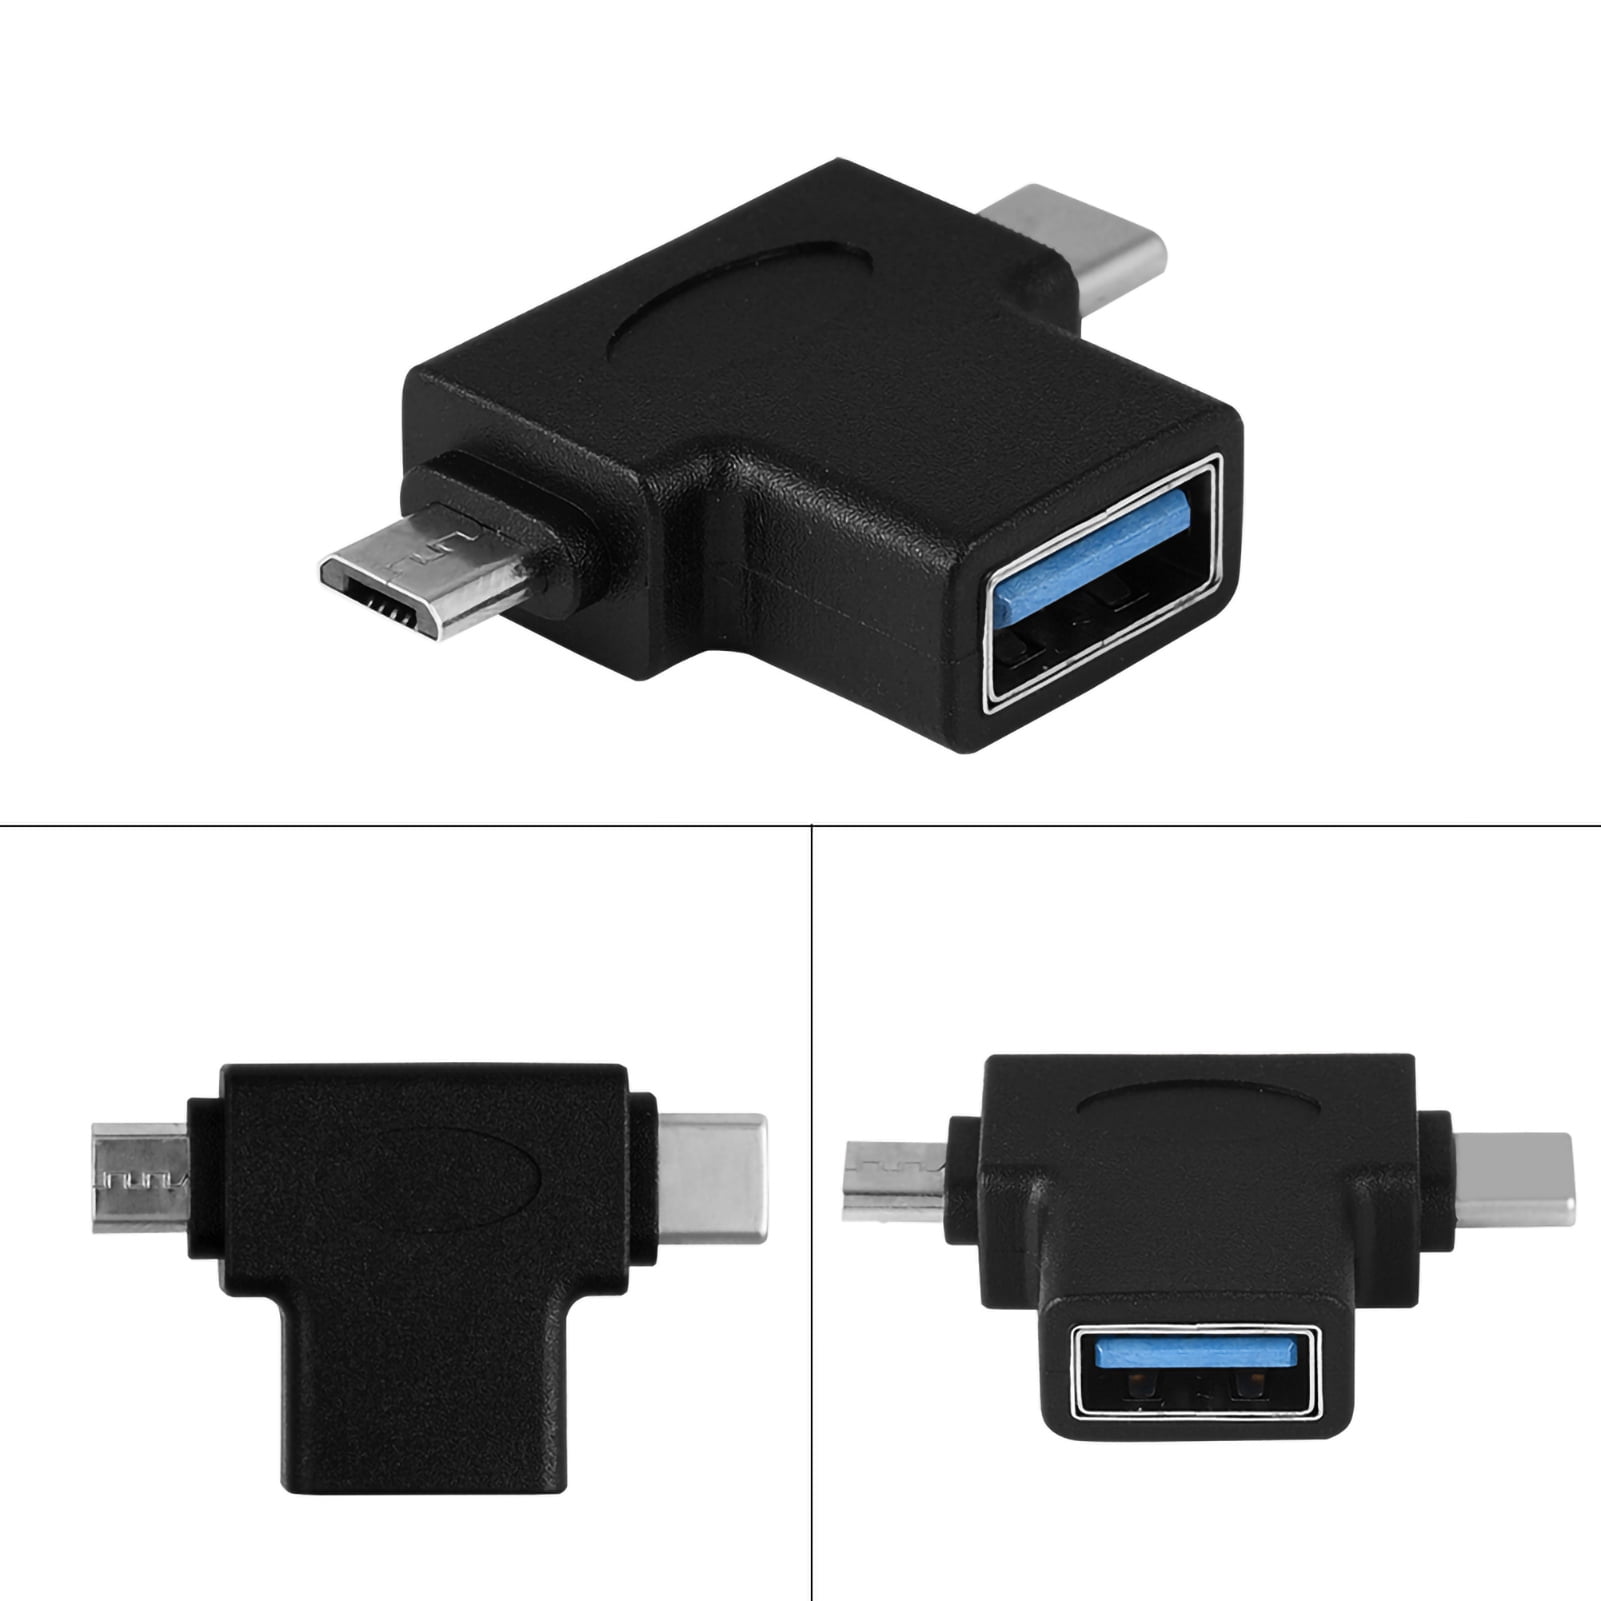 Clé USB mini port OTG Newark personnalisée